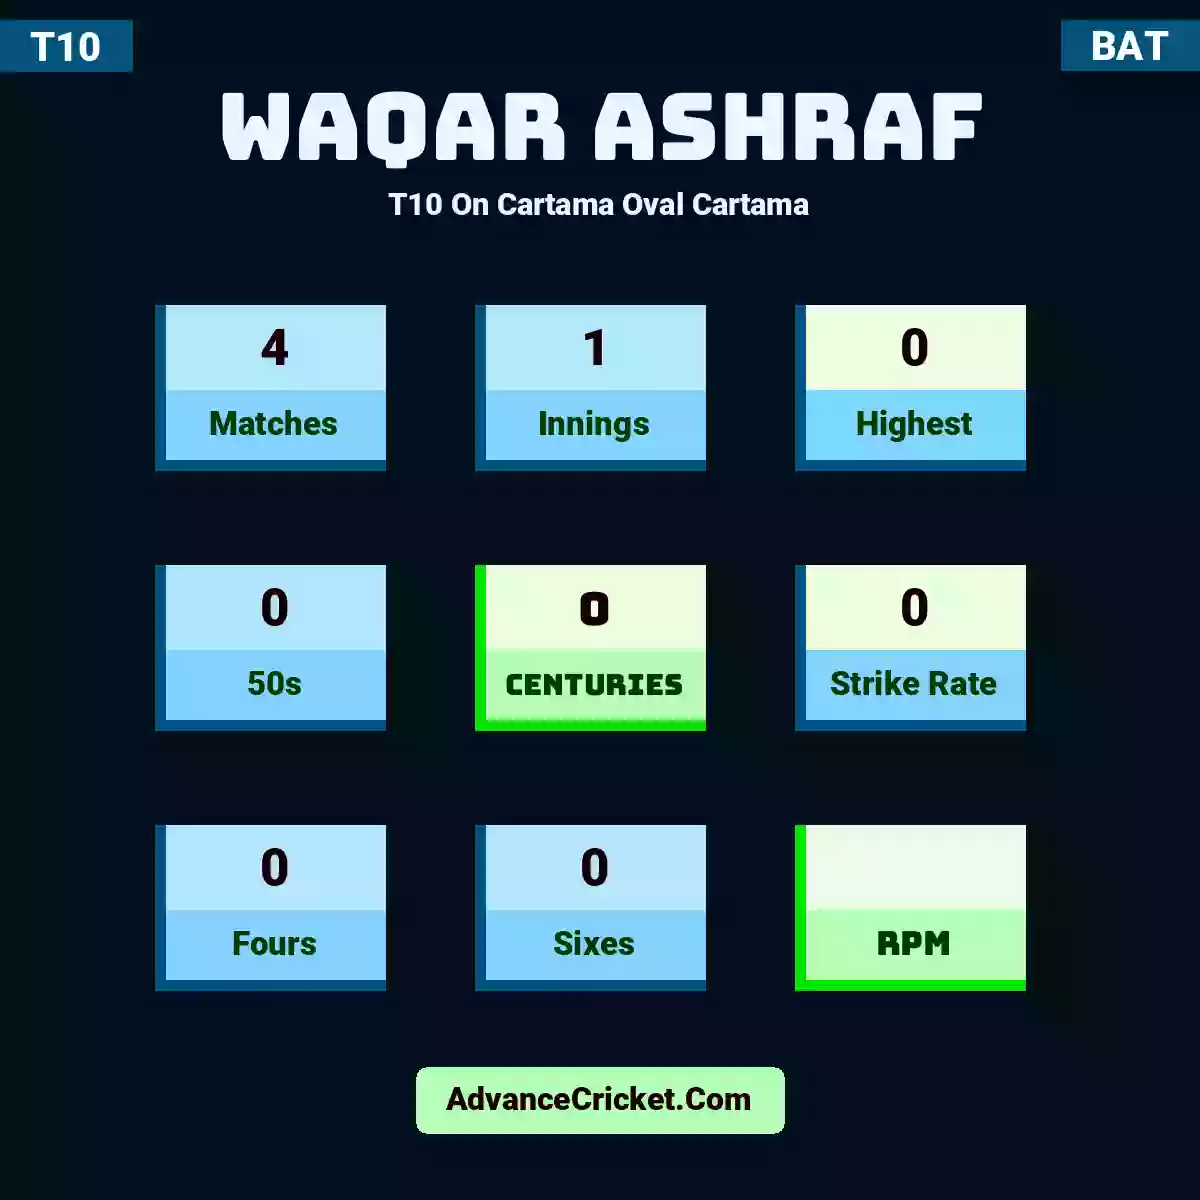 Waqar Ashraf T10  On Cartama Oval Cartama, Waqar Ashraf played 4 matches, scored 0 runs as highest, 0 half-centuries, and 0 centuries, with a strike rate of 0. W.Ashraf hit 0 fours and 0 sixes.